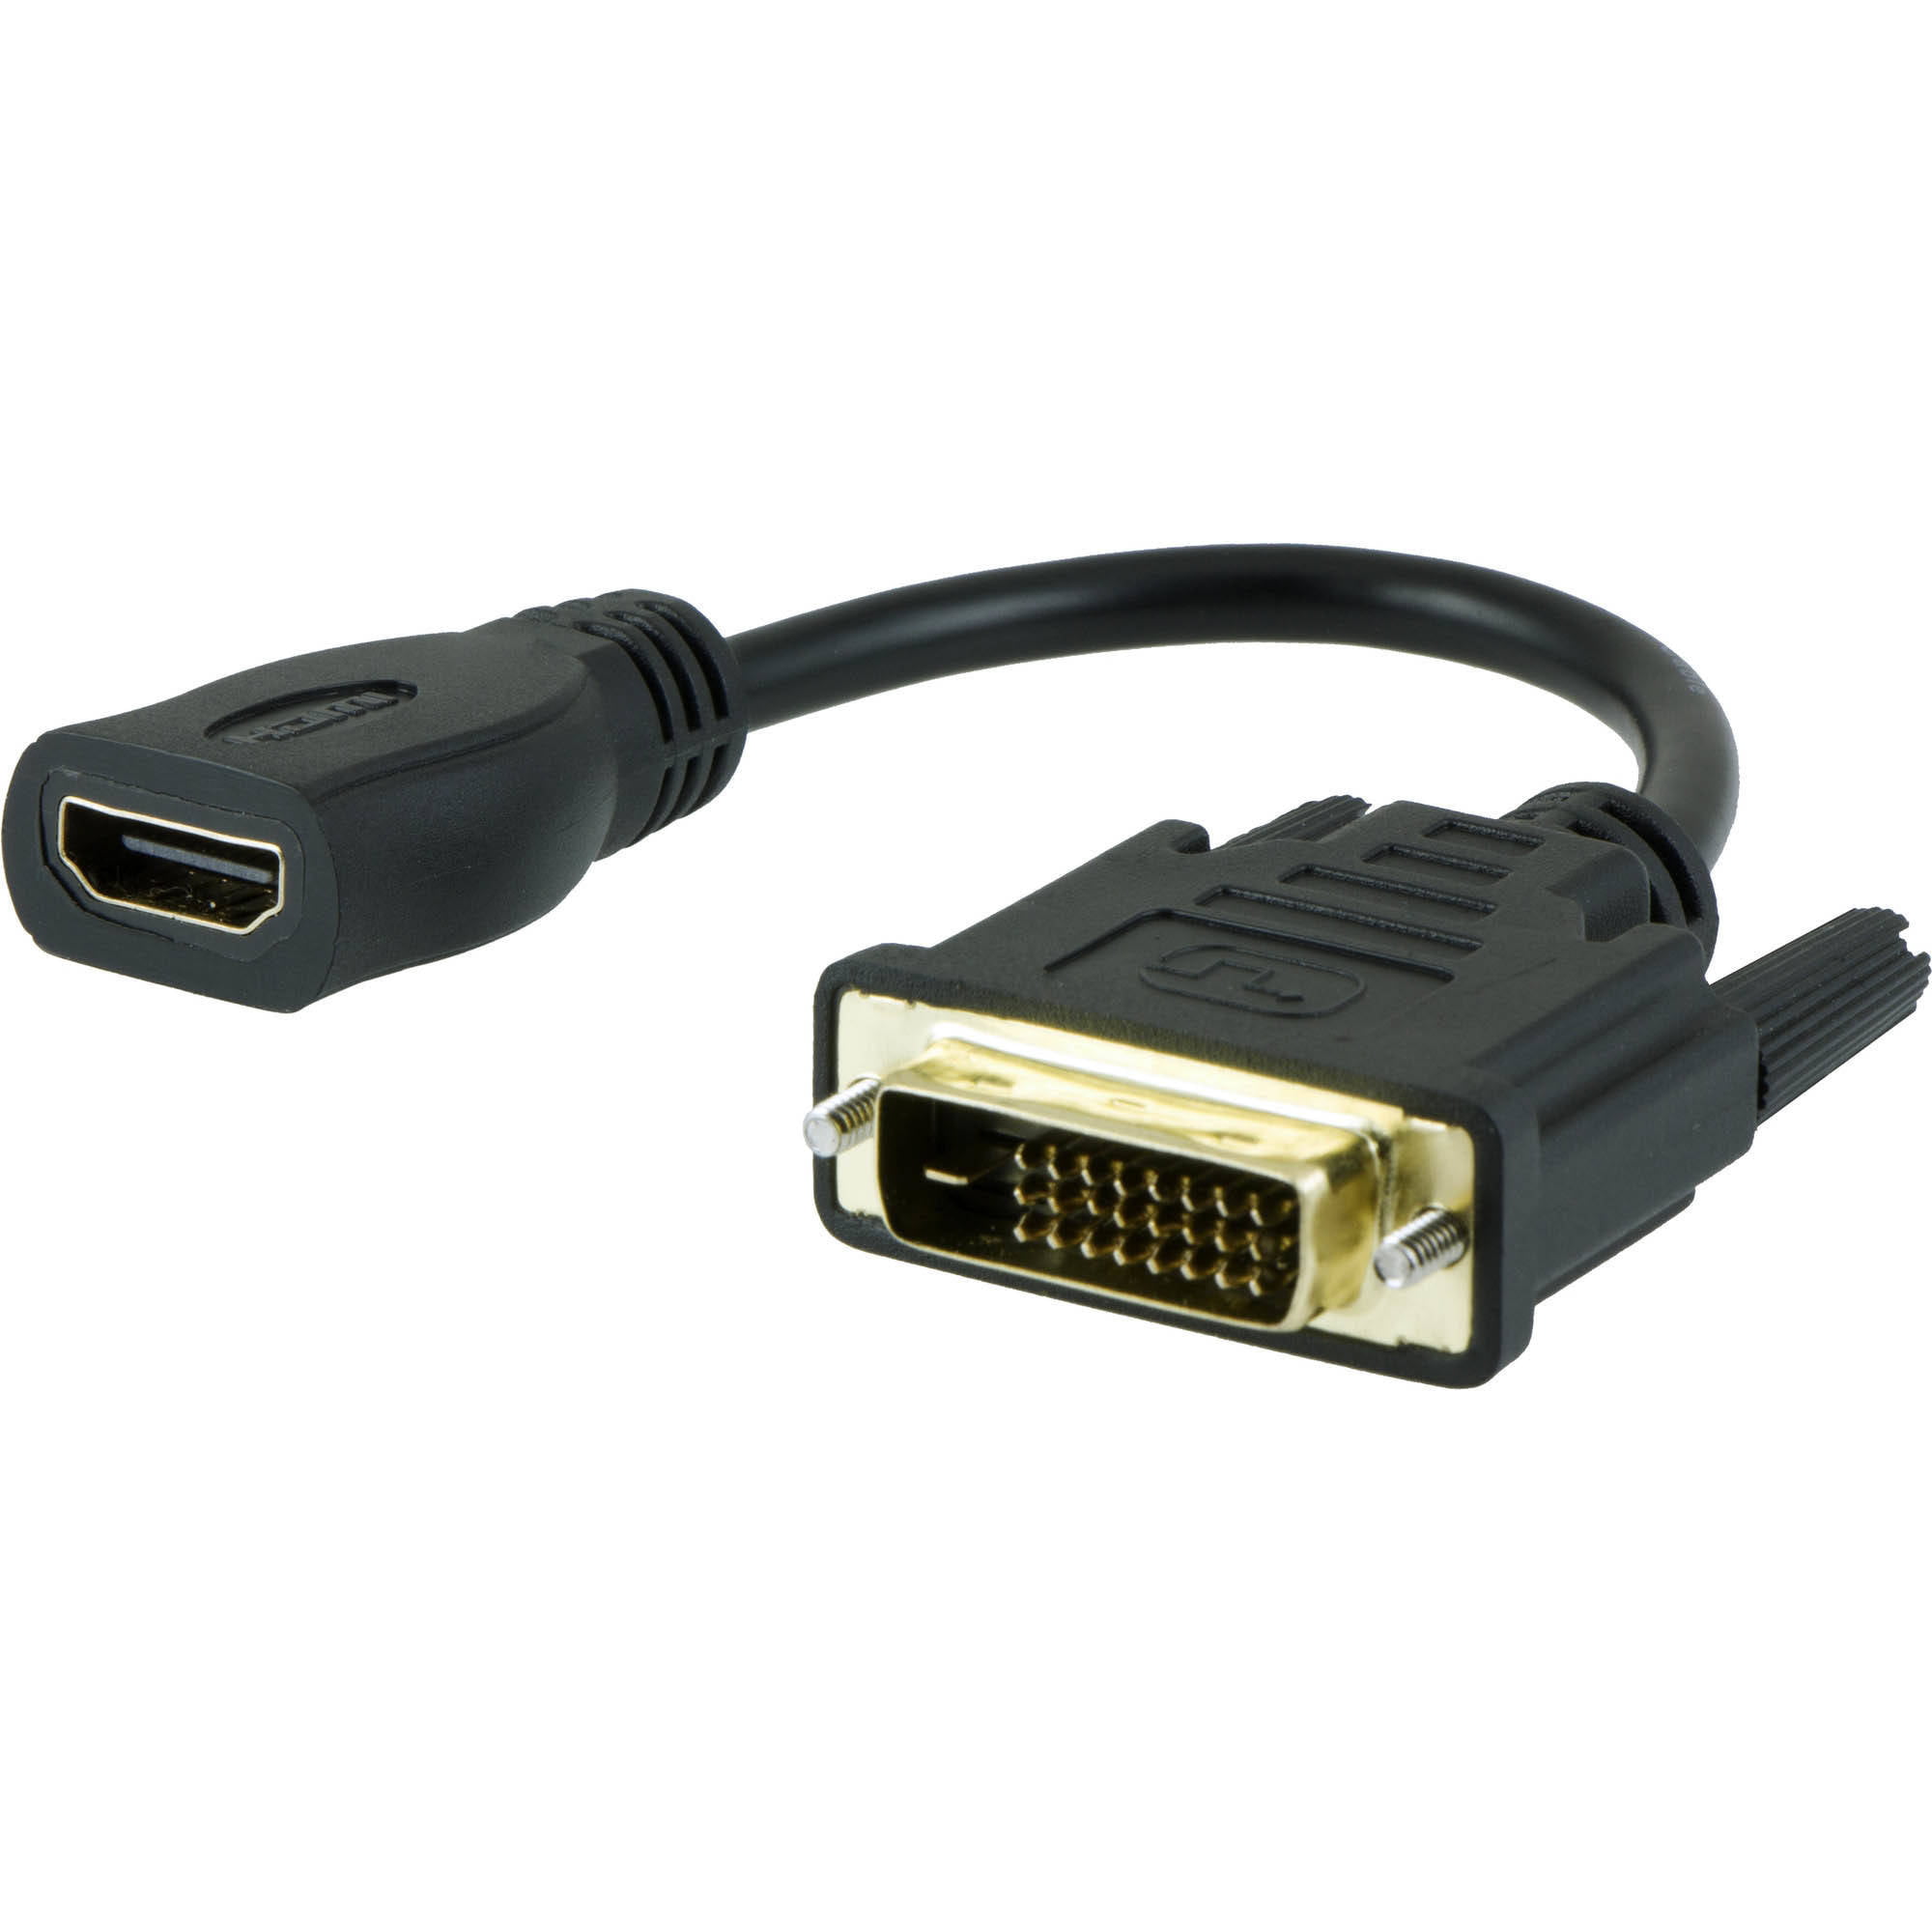 GE DVI to HDMI Adapter - Walmart.com - Walmart.com